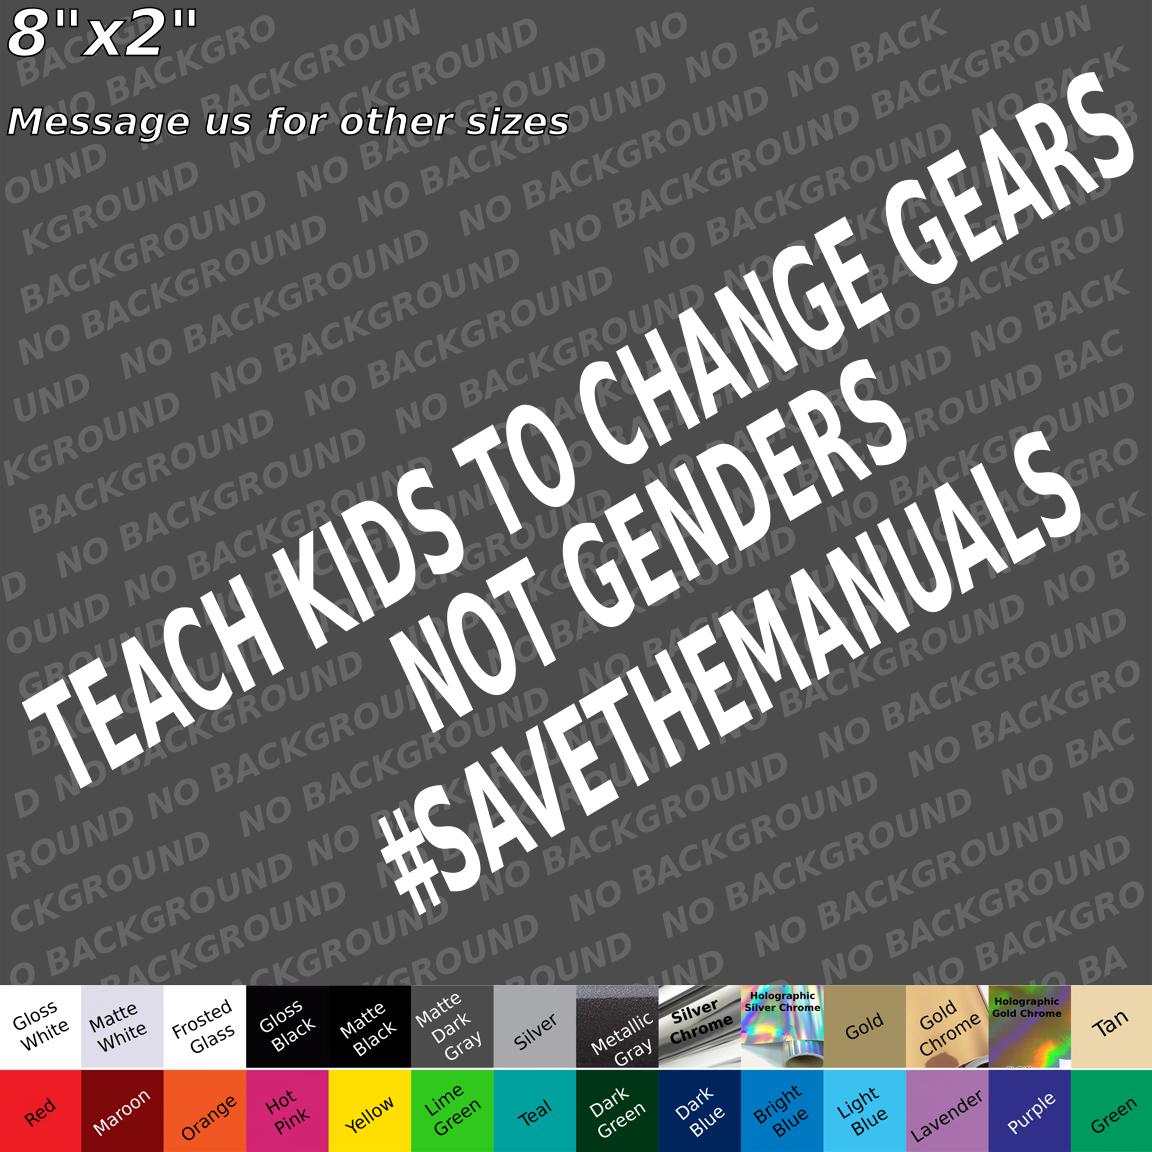 Teach kids to change gears not genders custom decal sticker manual transmission